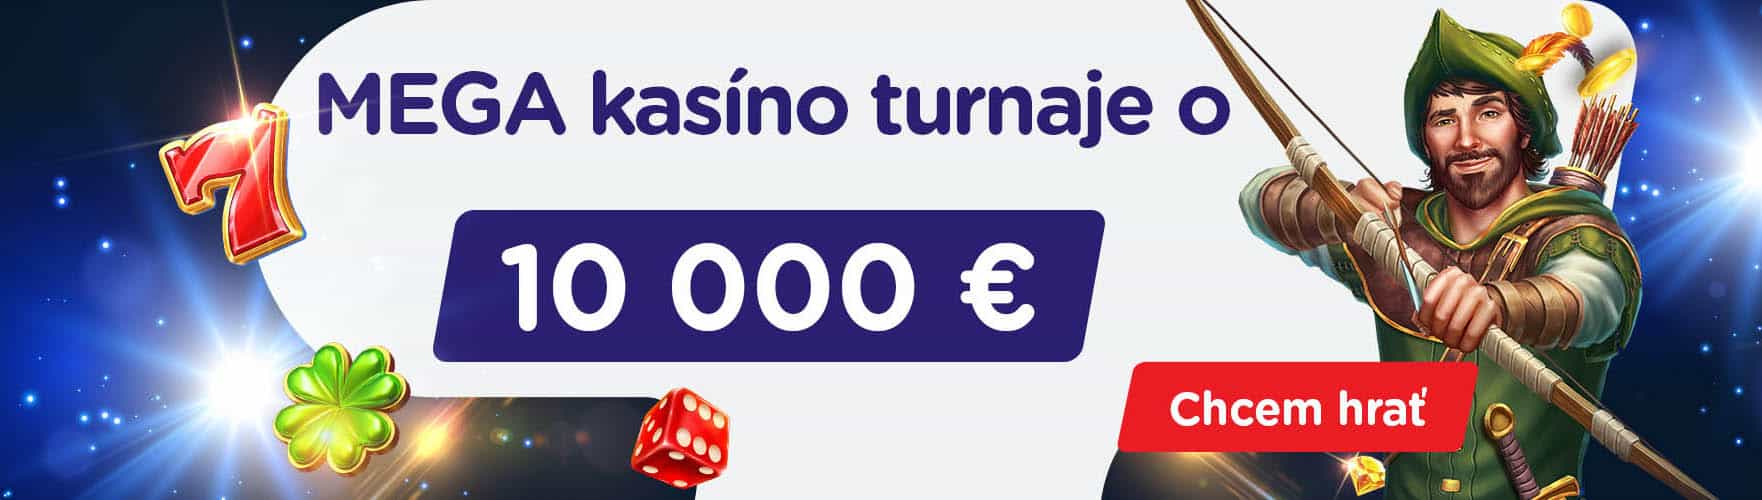 MEGA turnaje o 10 000 € v TIPOS kasíne - banner